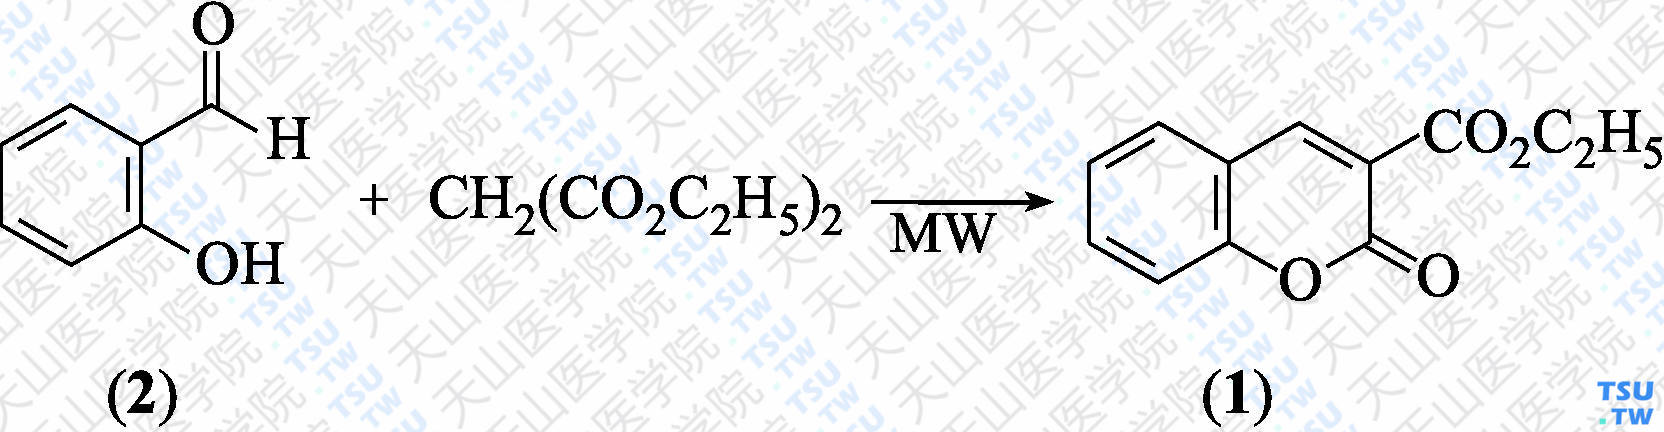 香豆素-3-羧酸乙酯（分子式：C<sub>12</sub>H<sub>10</sub>O<sub>4</sub>）的合成方法路线及其结构式